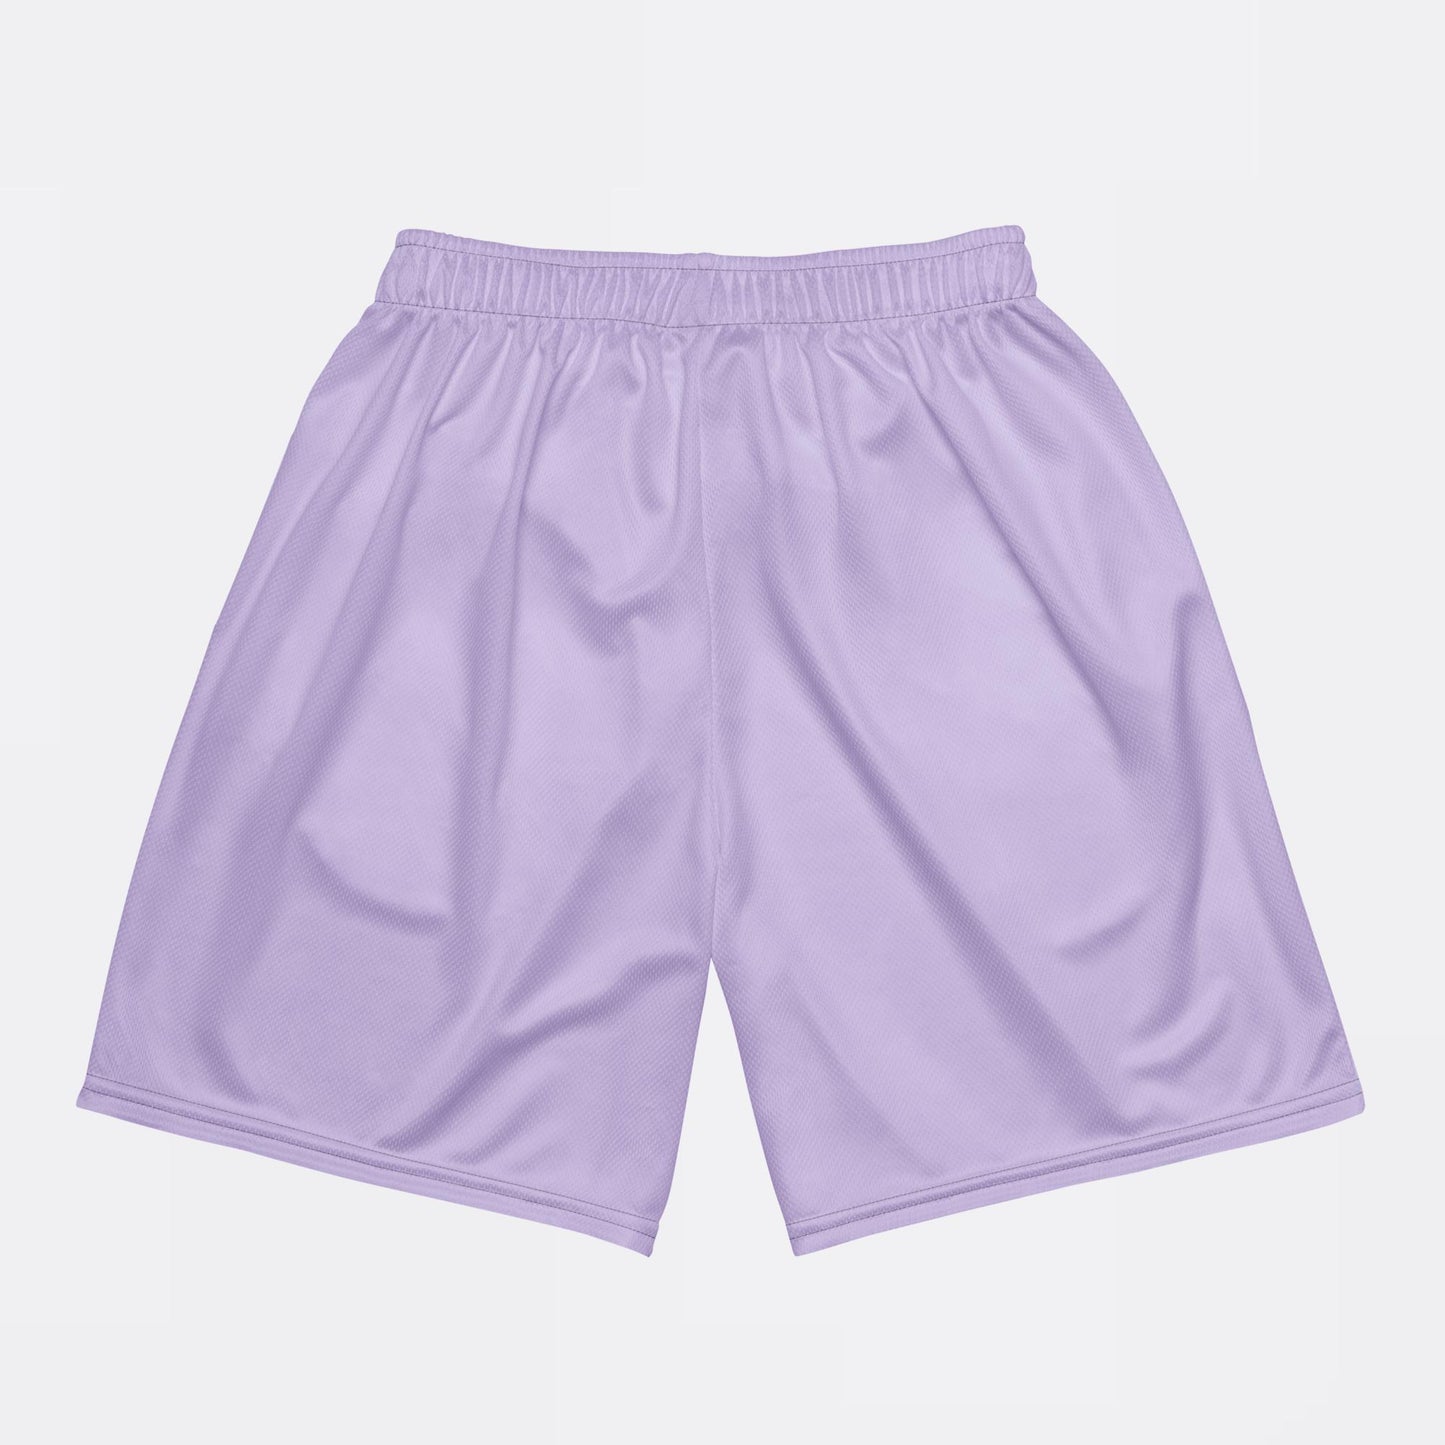 Mesh shorts Violet